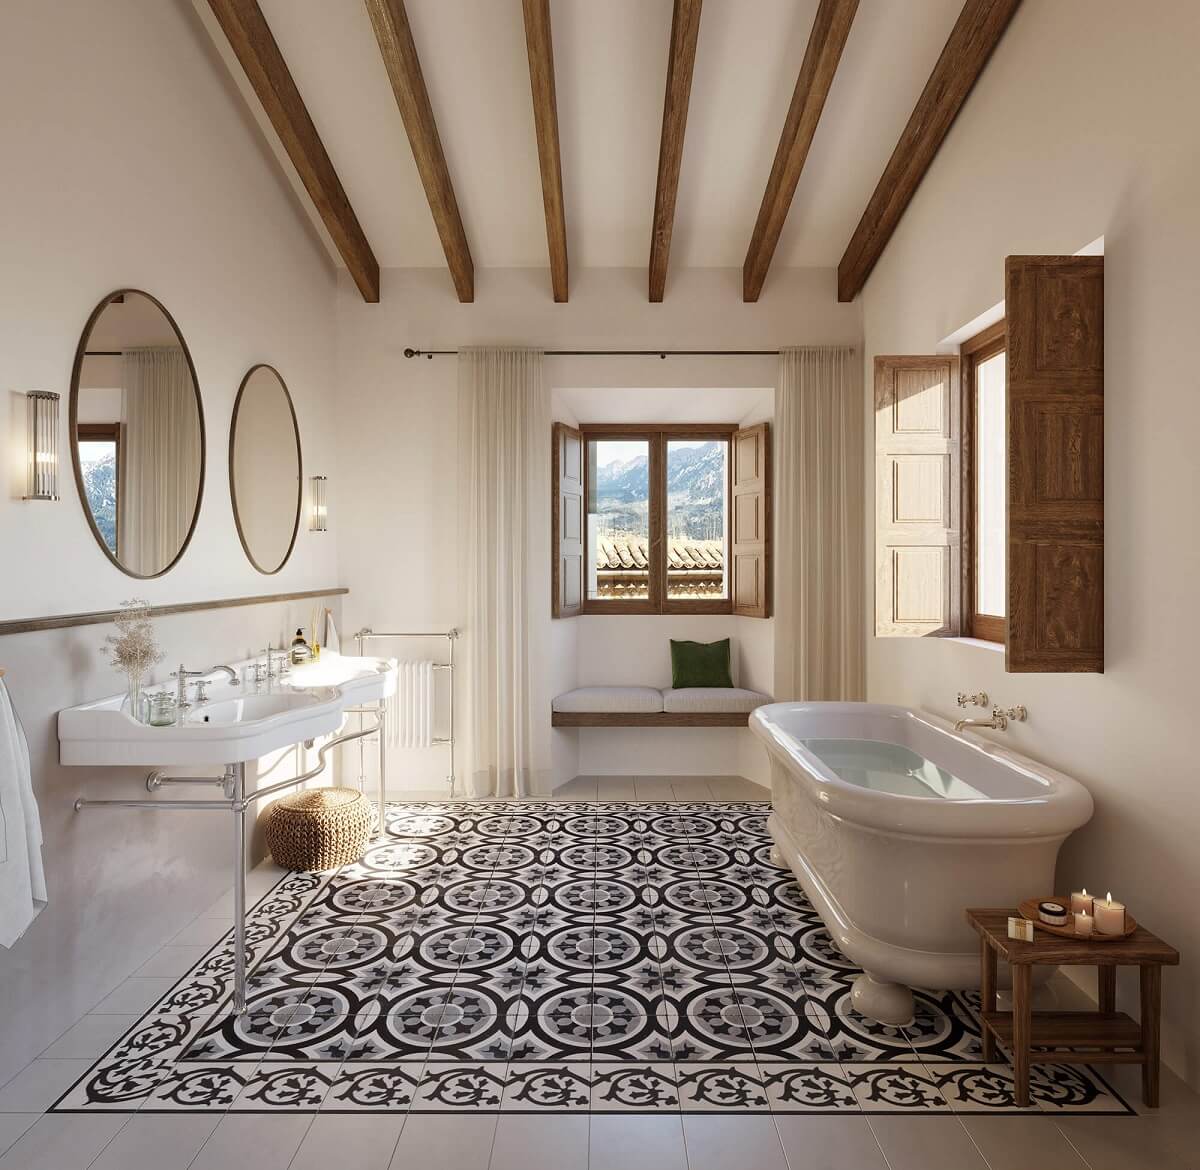 master-bathoom-exposed-beams-freestanding-bath-floor-tiles-round-mirrors-townhouse-nordroom